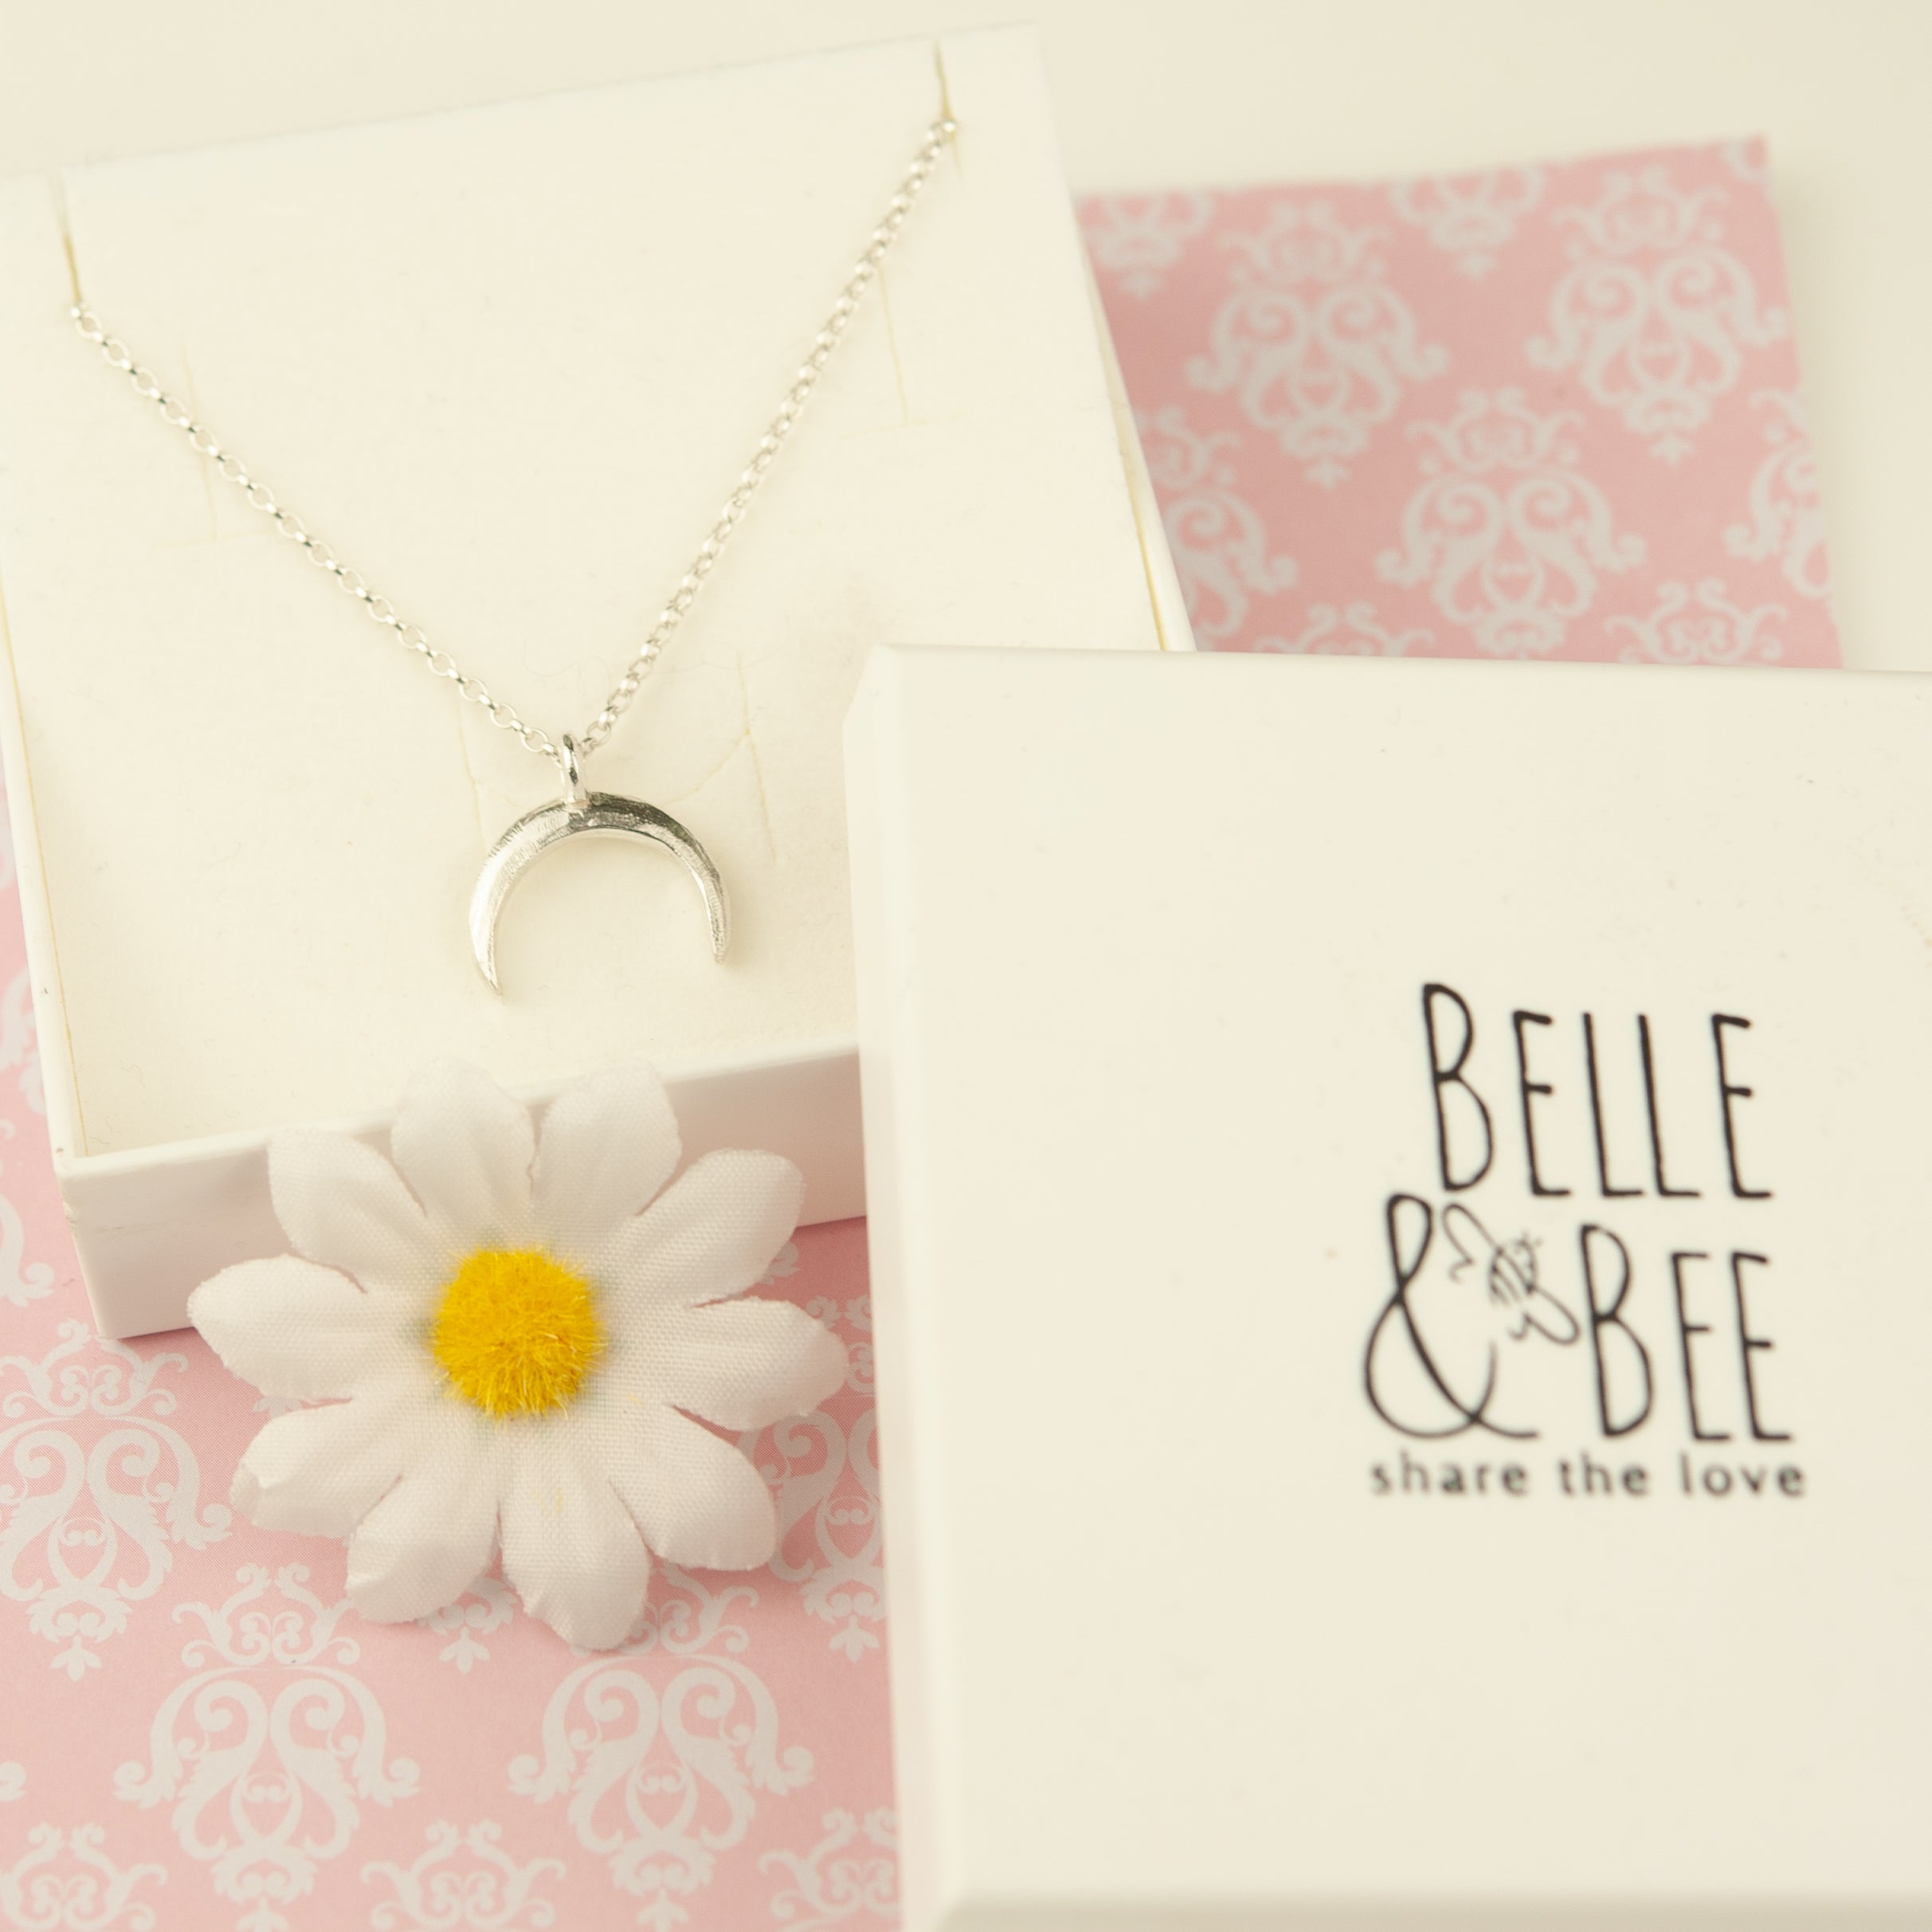 Belle & Bee moon necklace